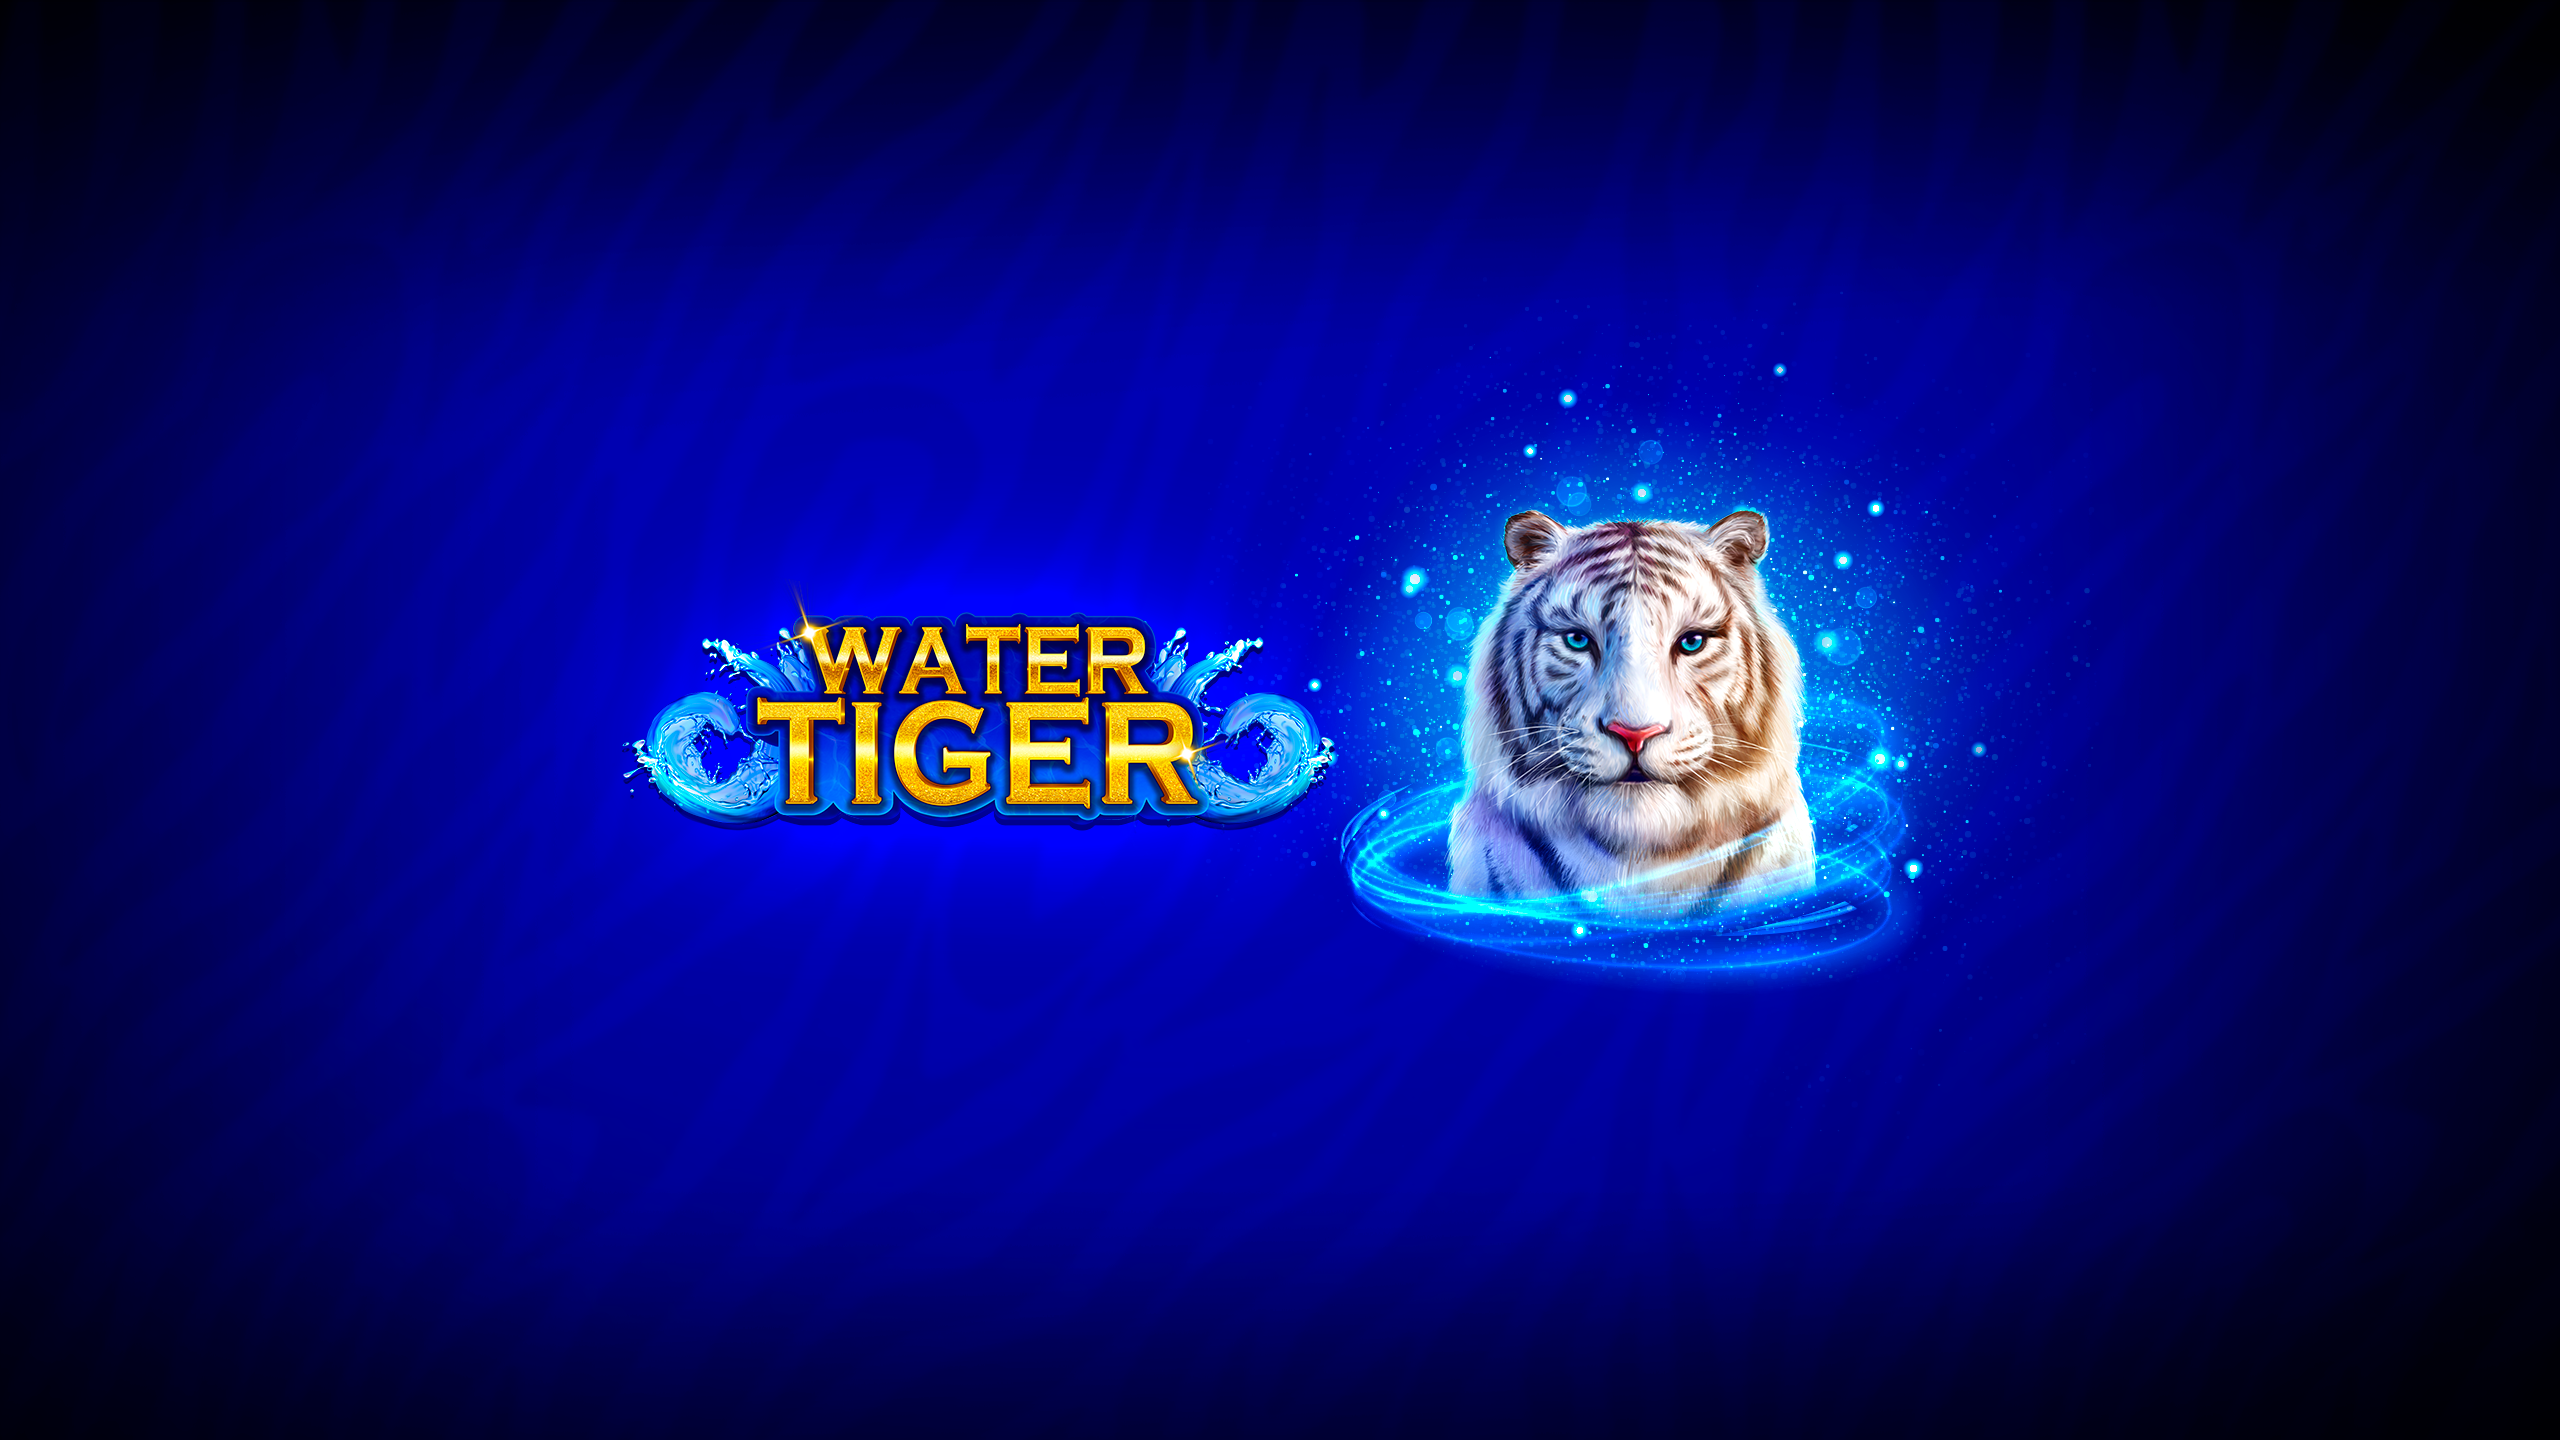 Water Tiger demo